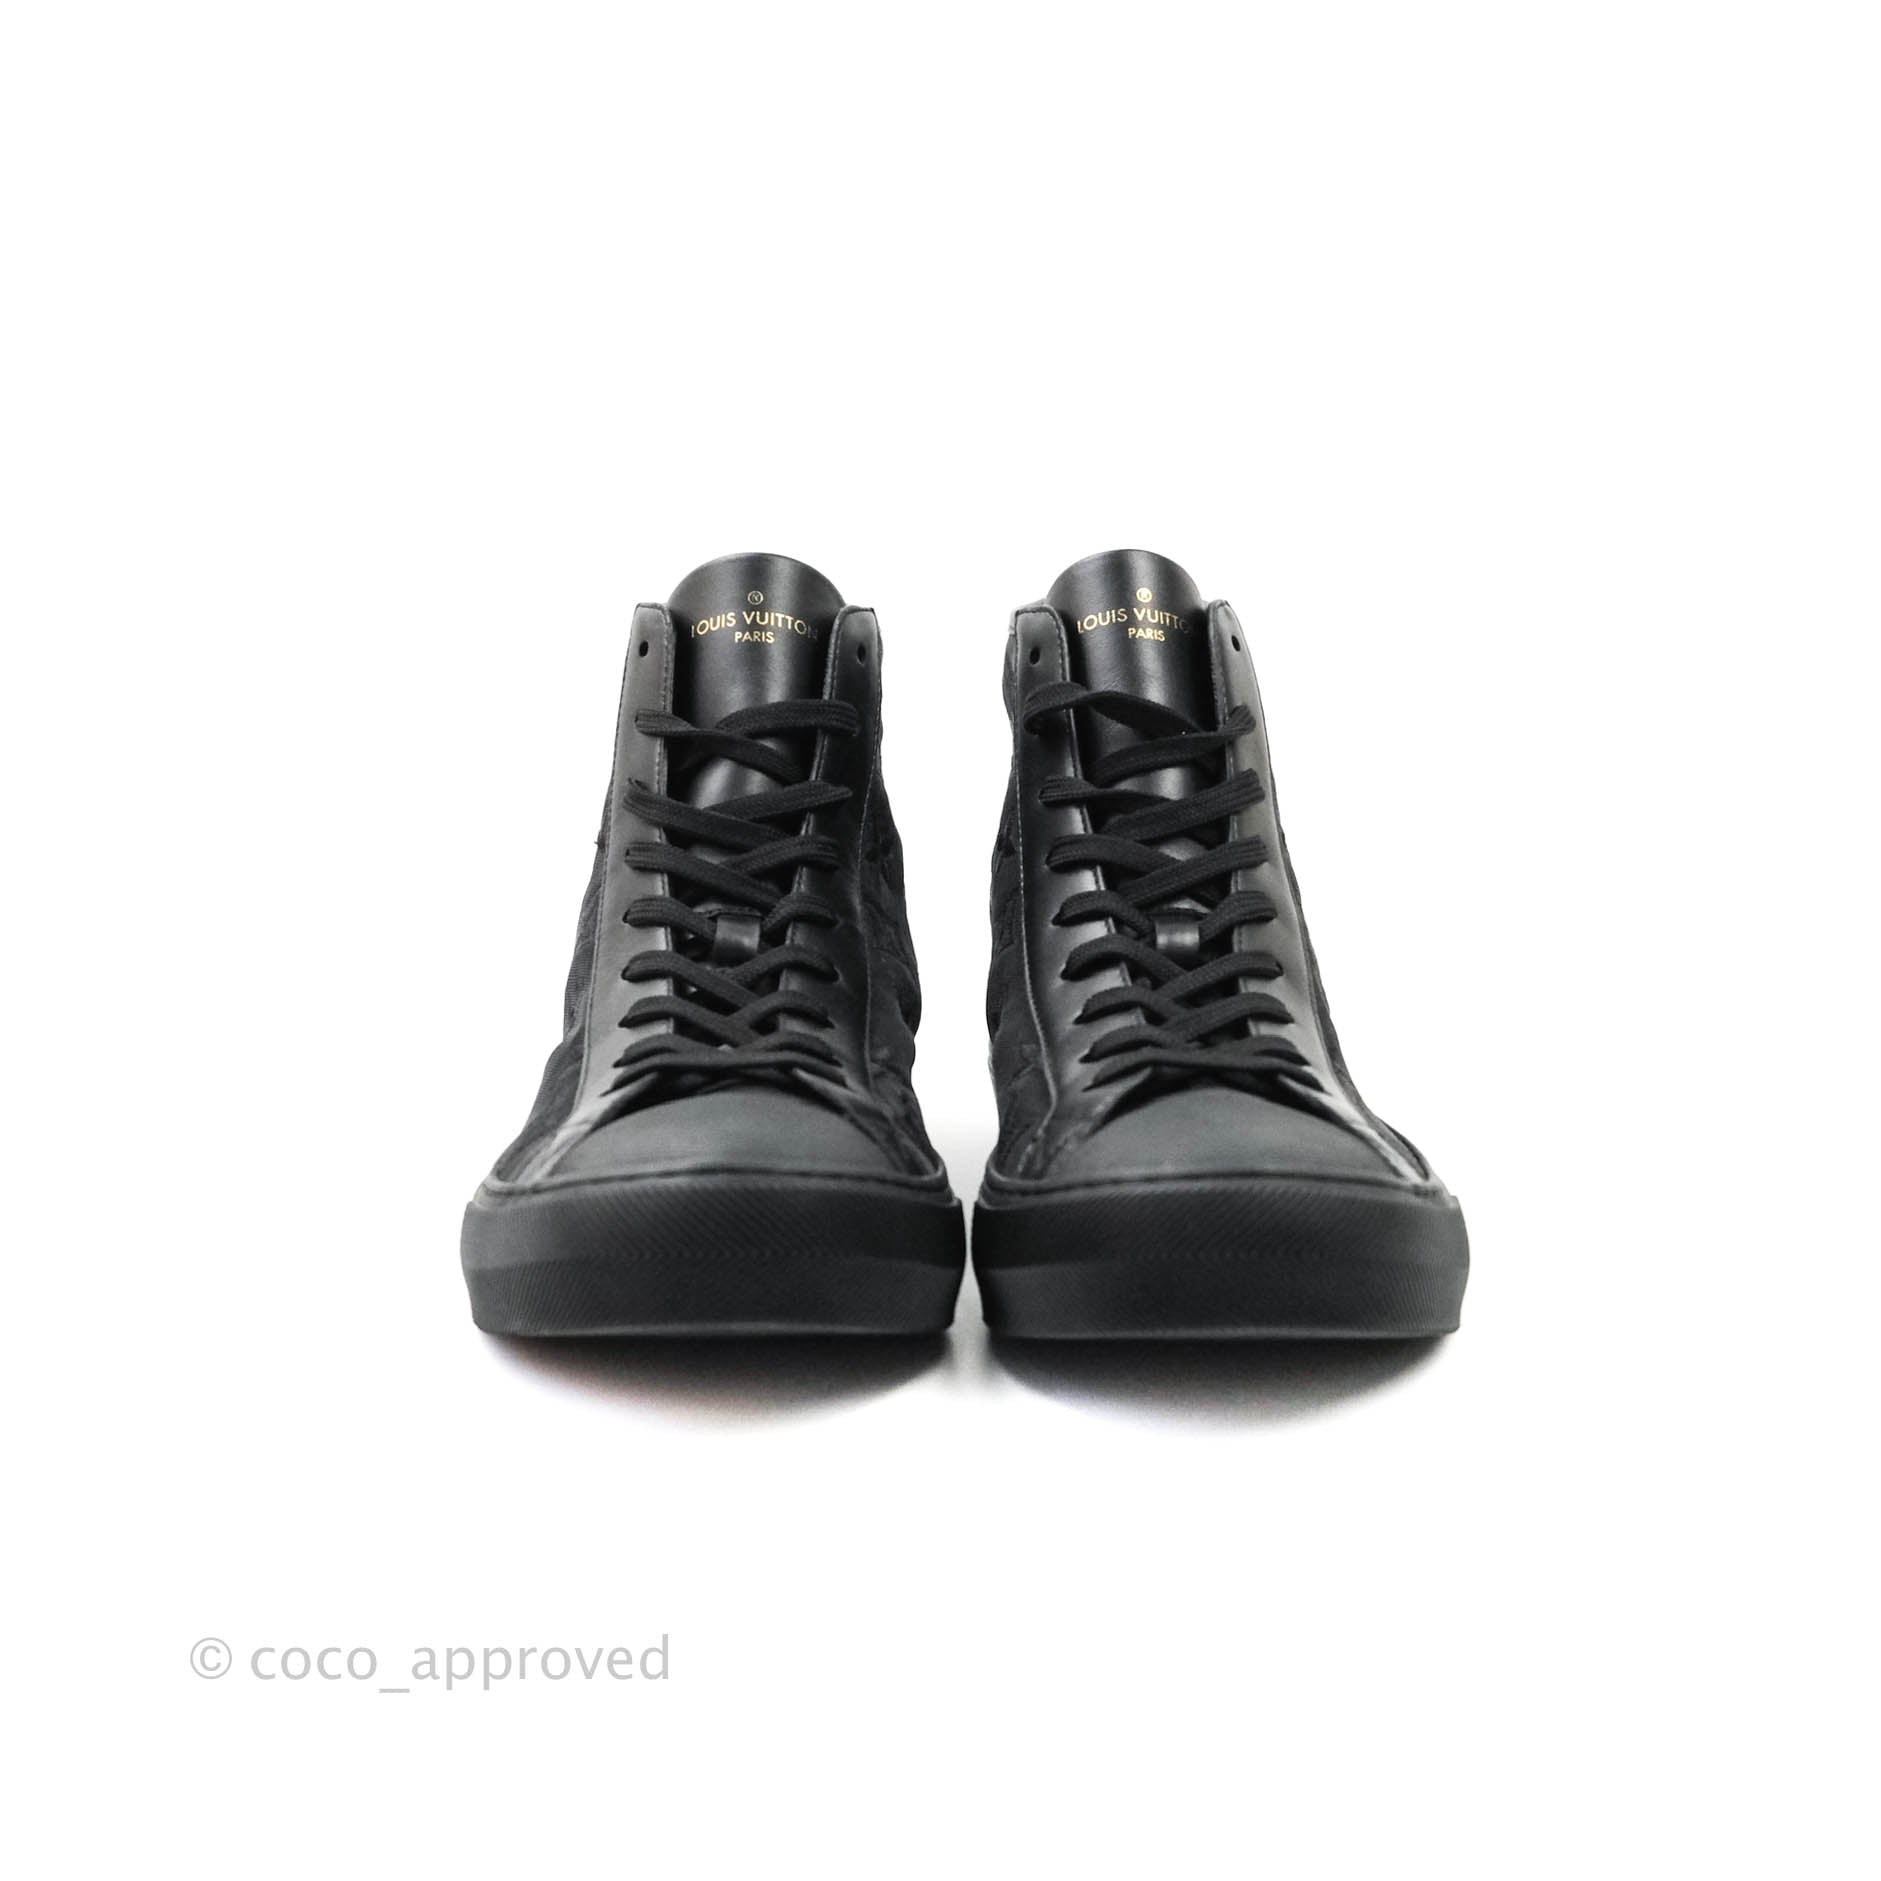 Sold at Auction: Louis Vuitton - Sneakers Size: Men's 9.5 - US